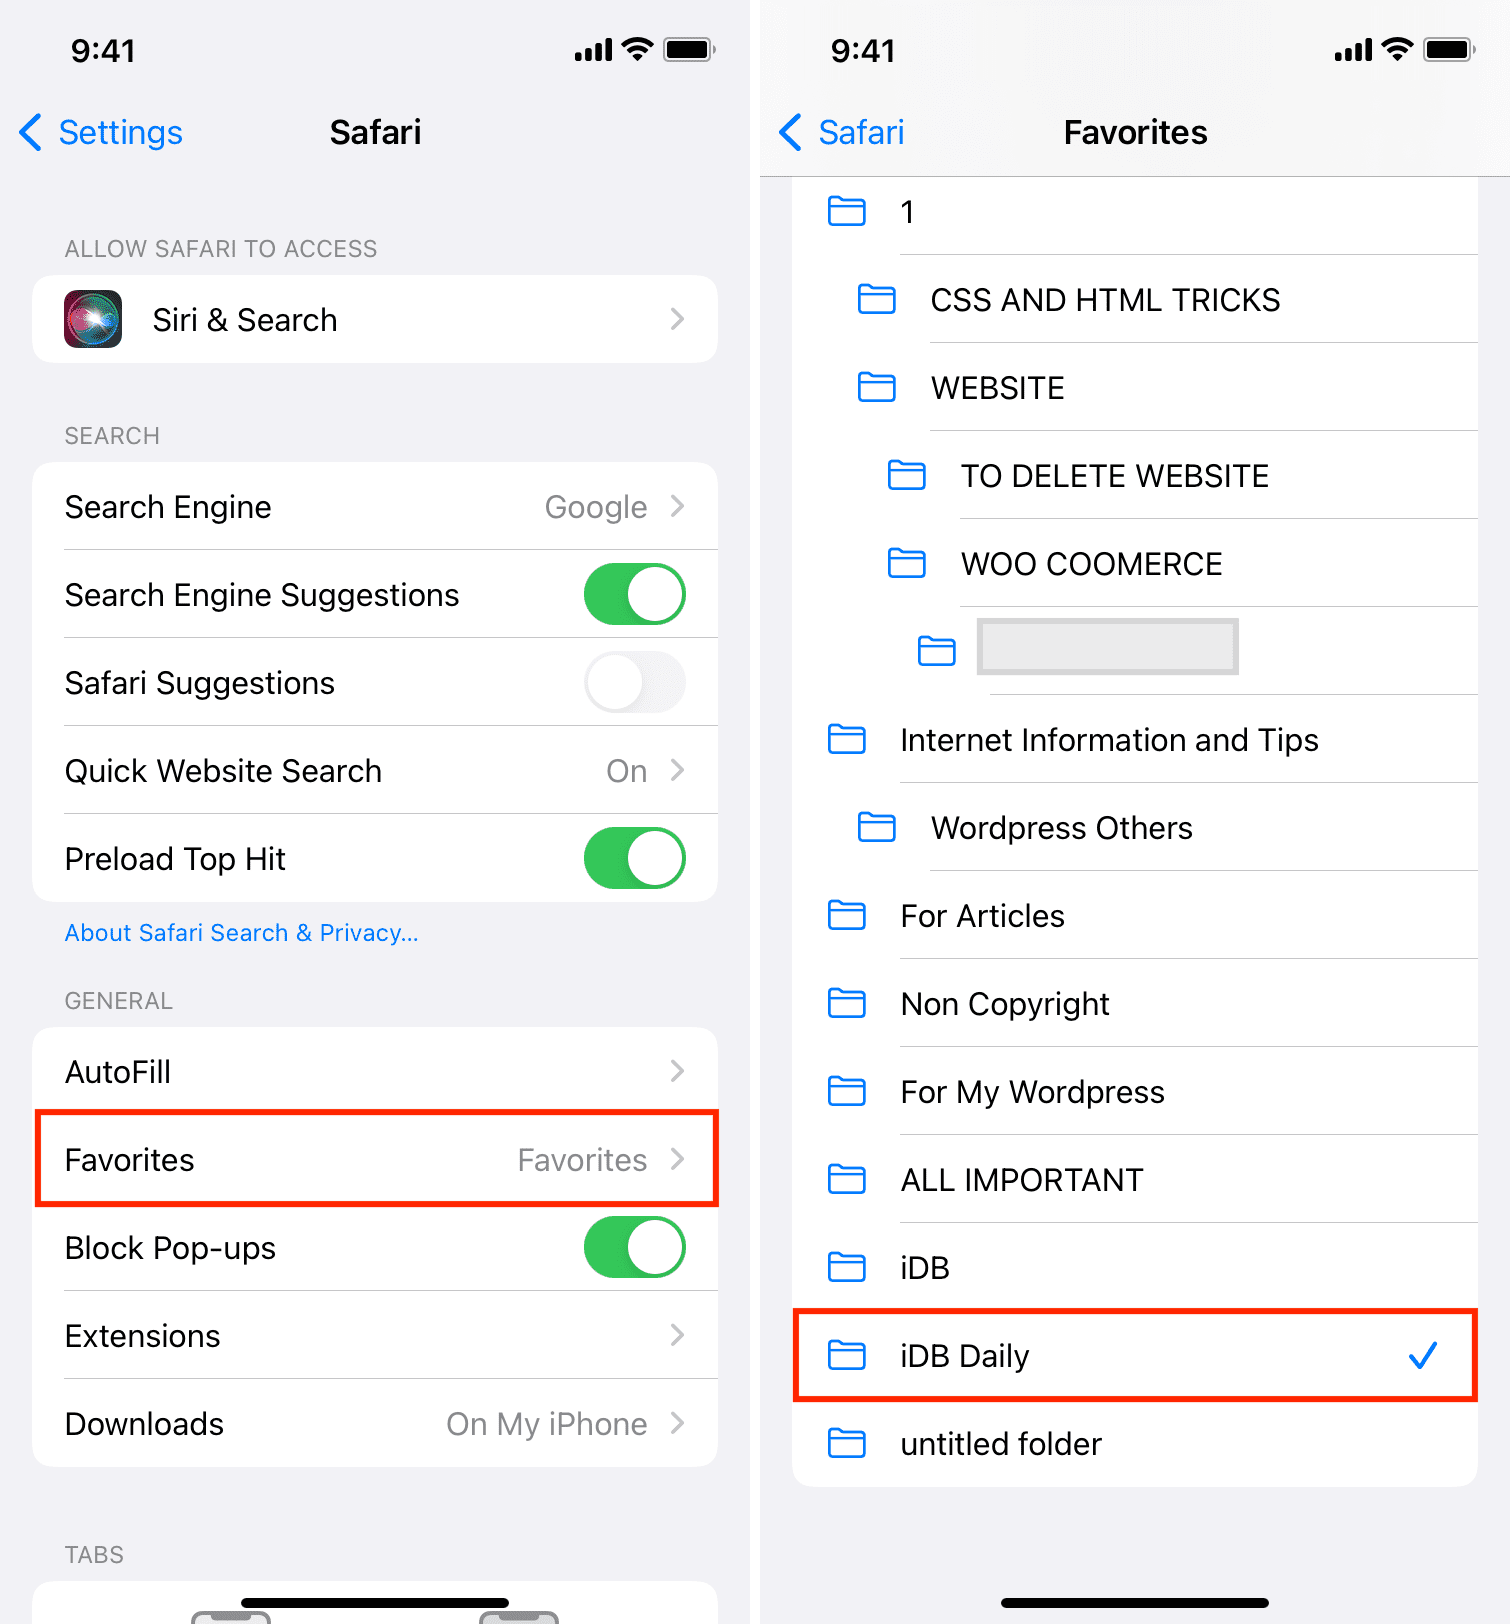 Favorites folder settings for Safari on iPhone